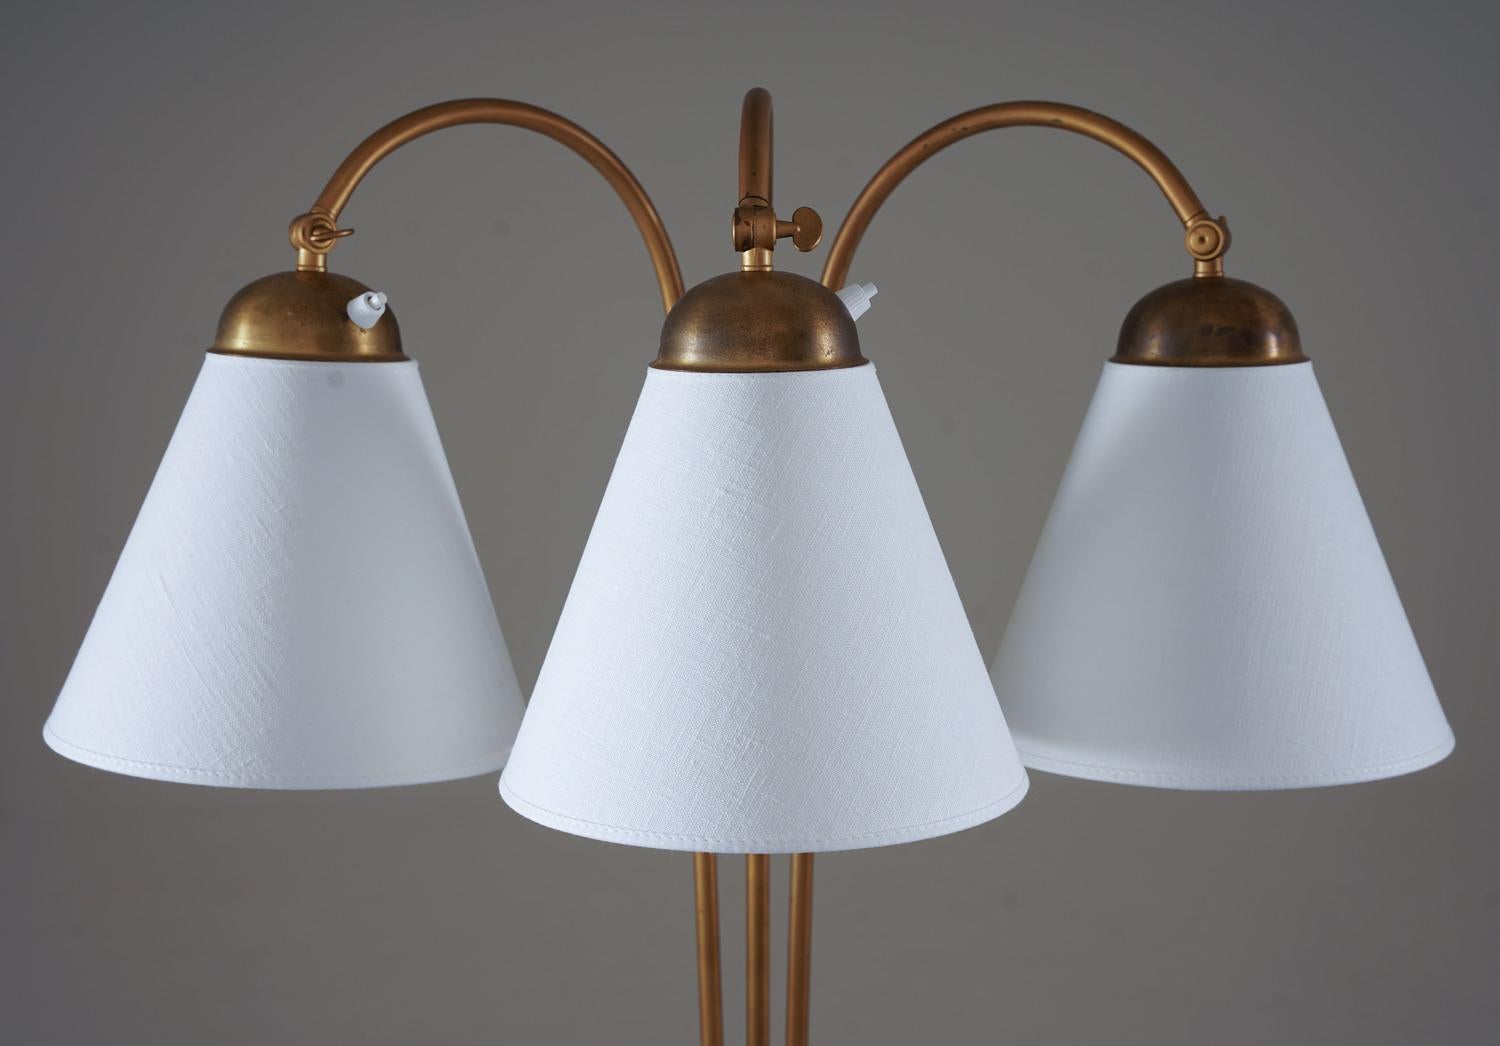 20th Century Swedish Modern Floor Lamp in Brass, 1940s For Sale